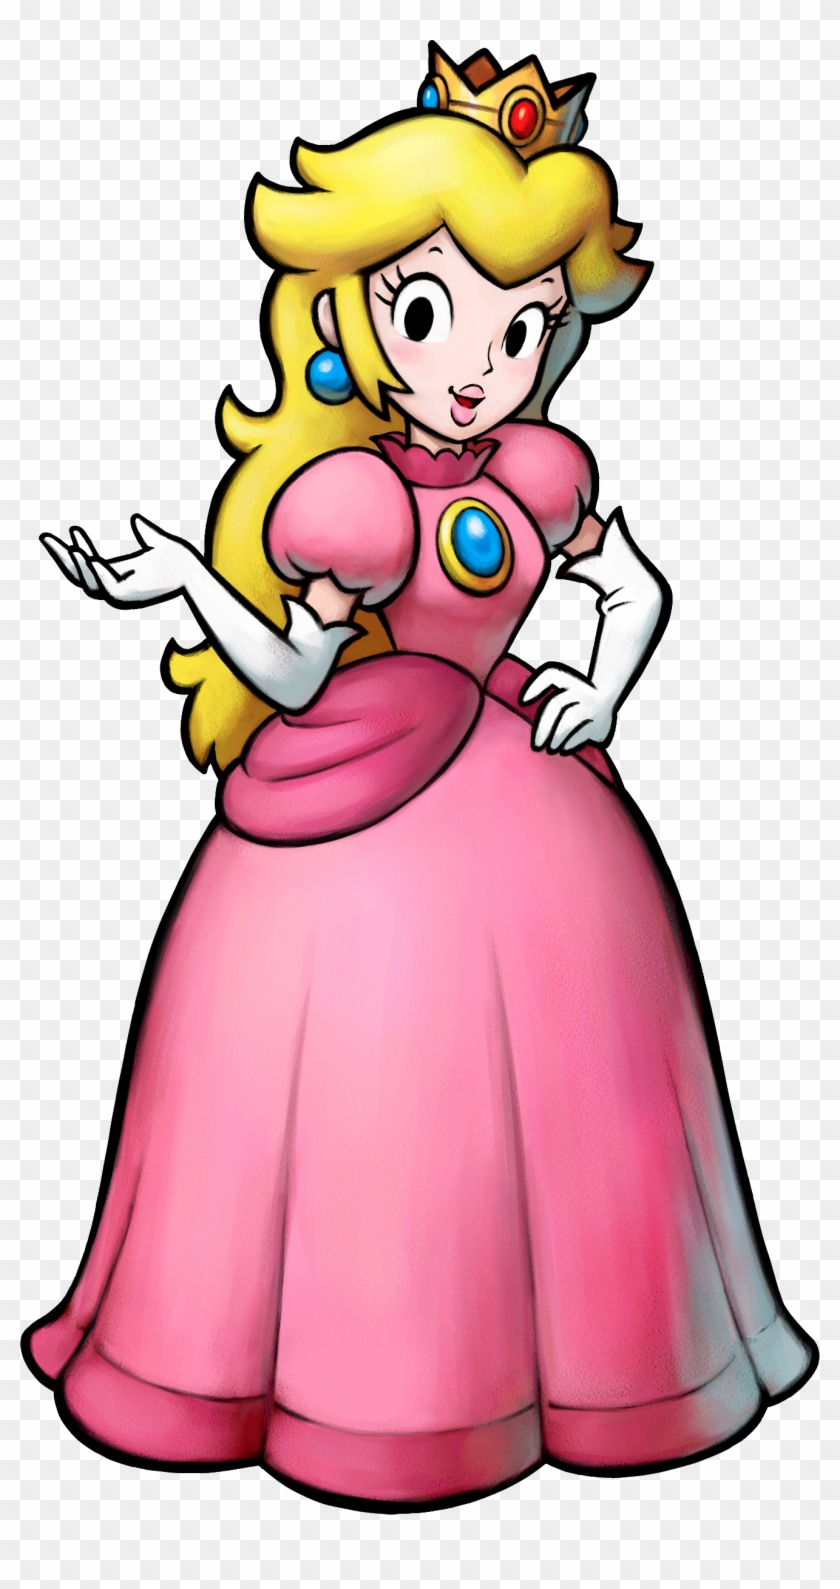 Download Mario Super Characters Pinterest - Peach Princess, HD Png ...